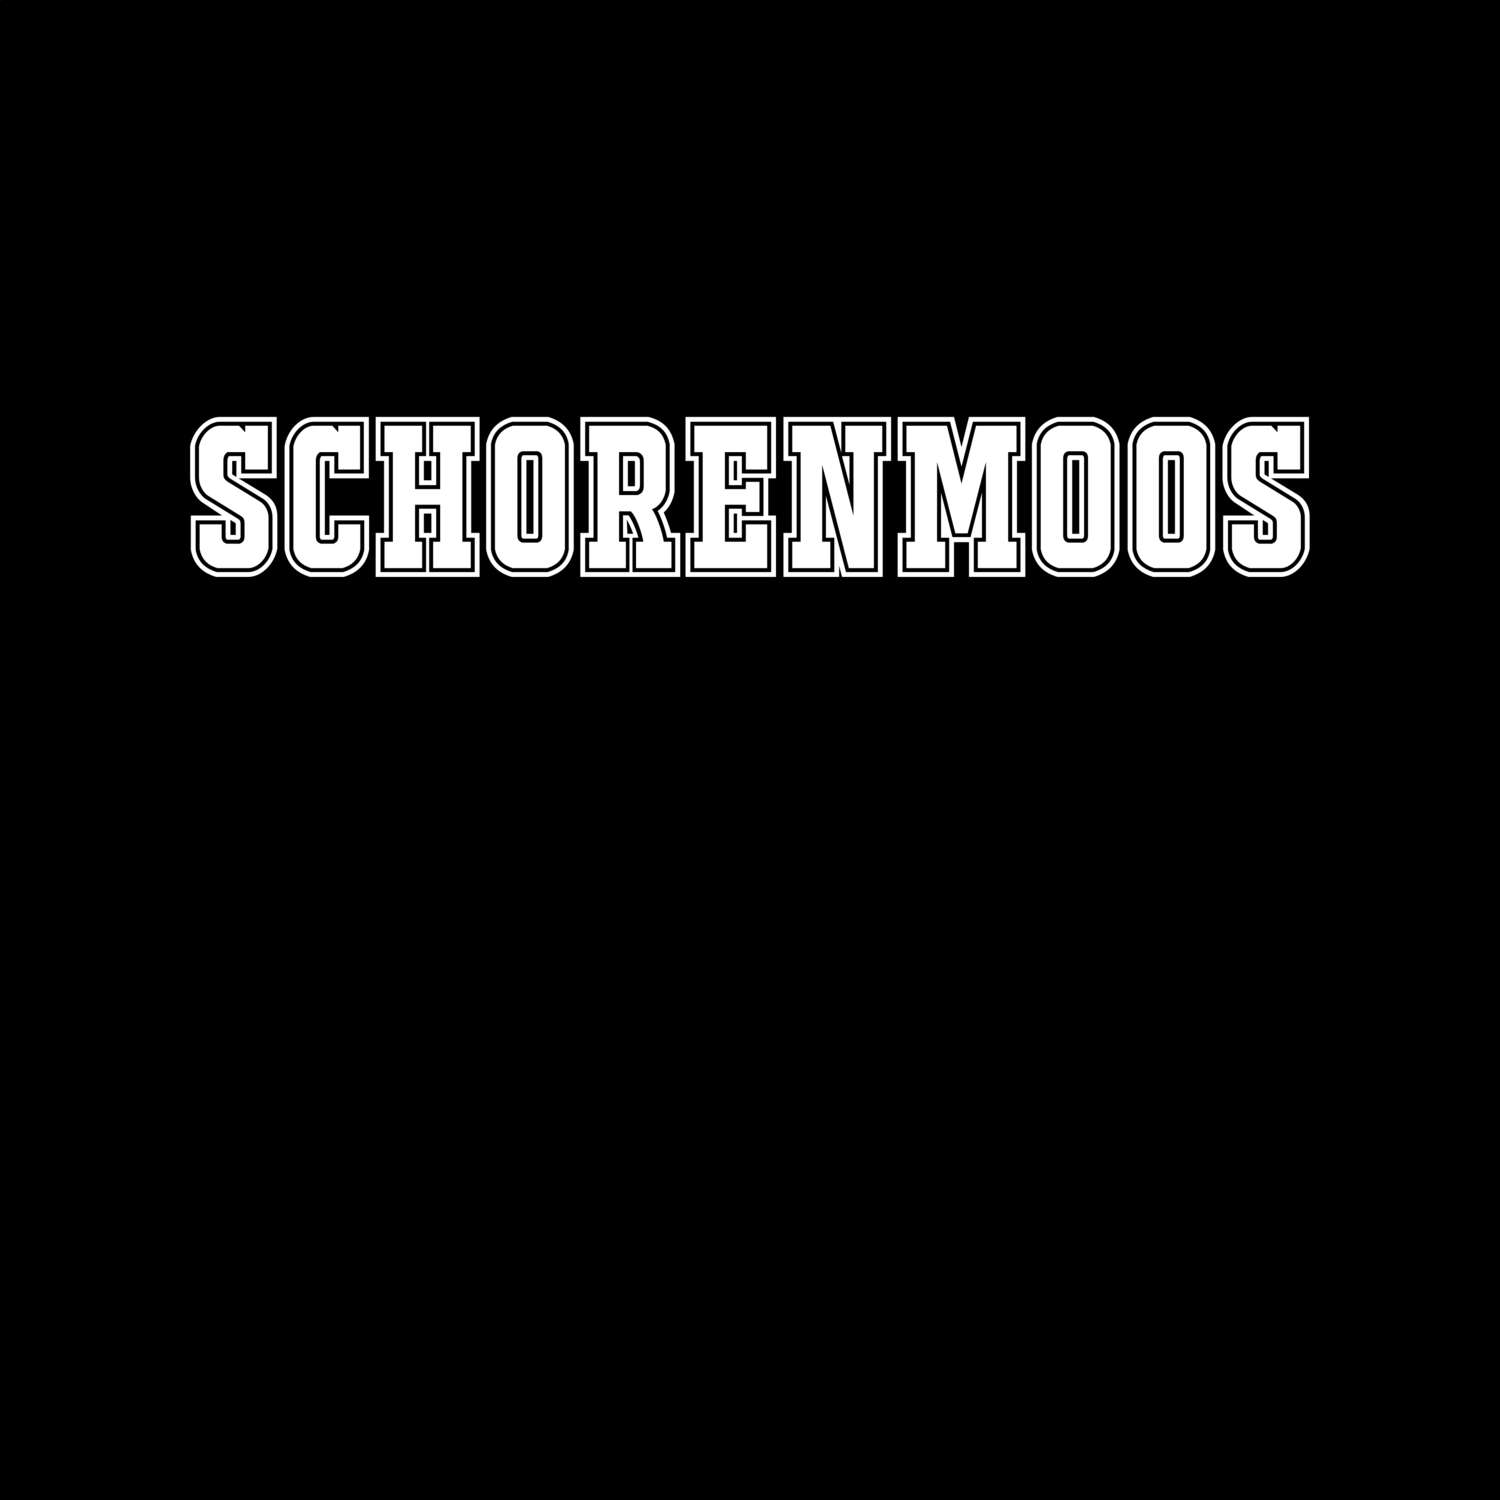 Schorenmoos T-Shirt »Classic«